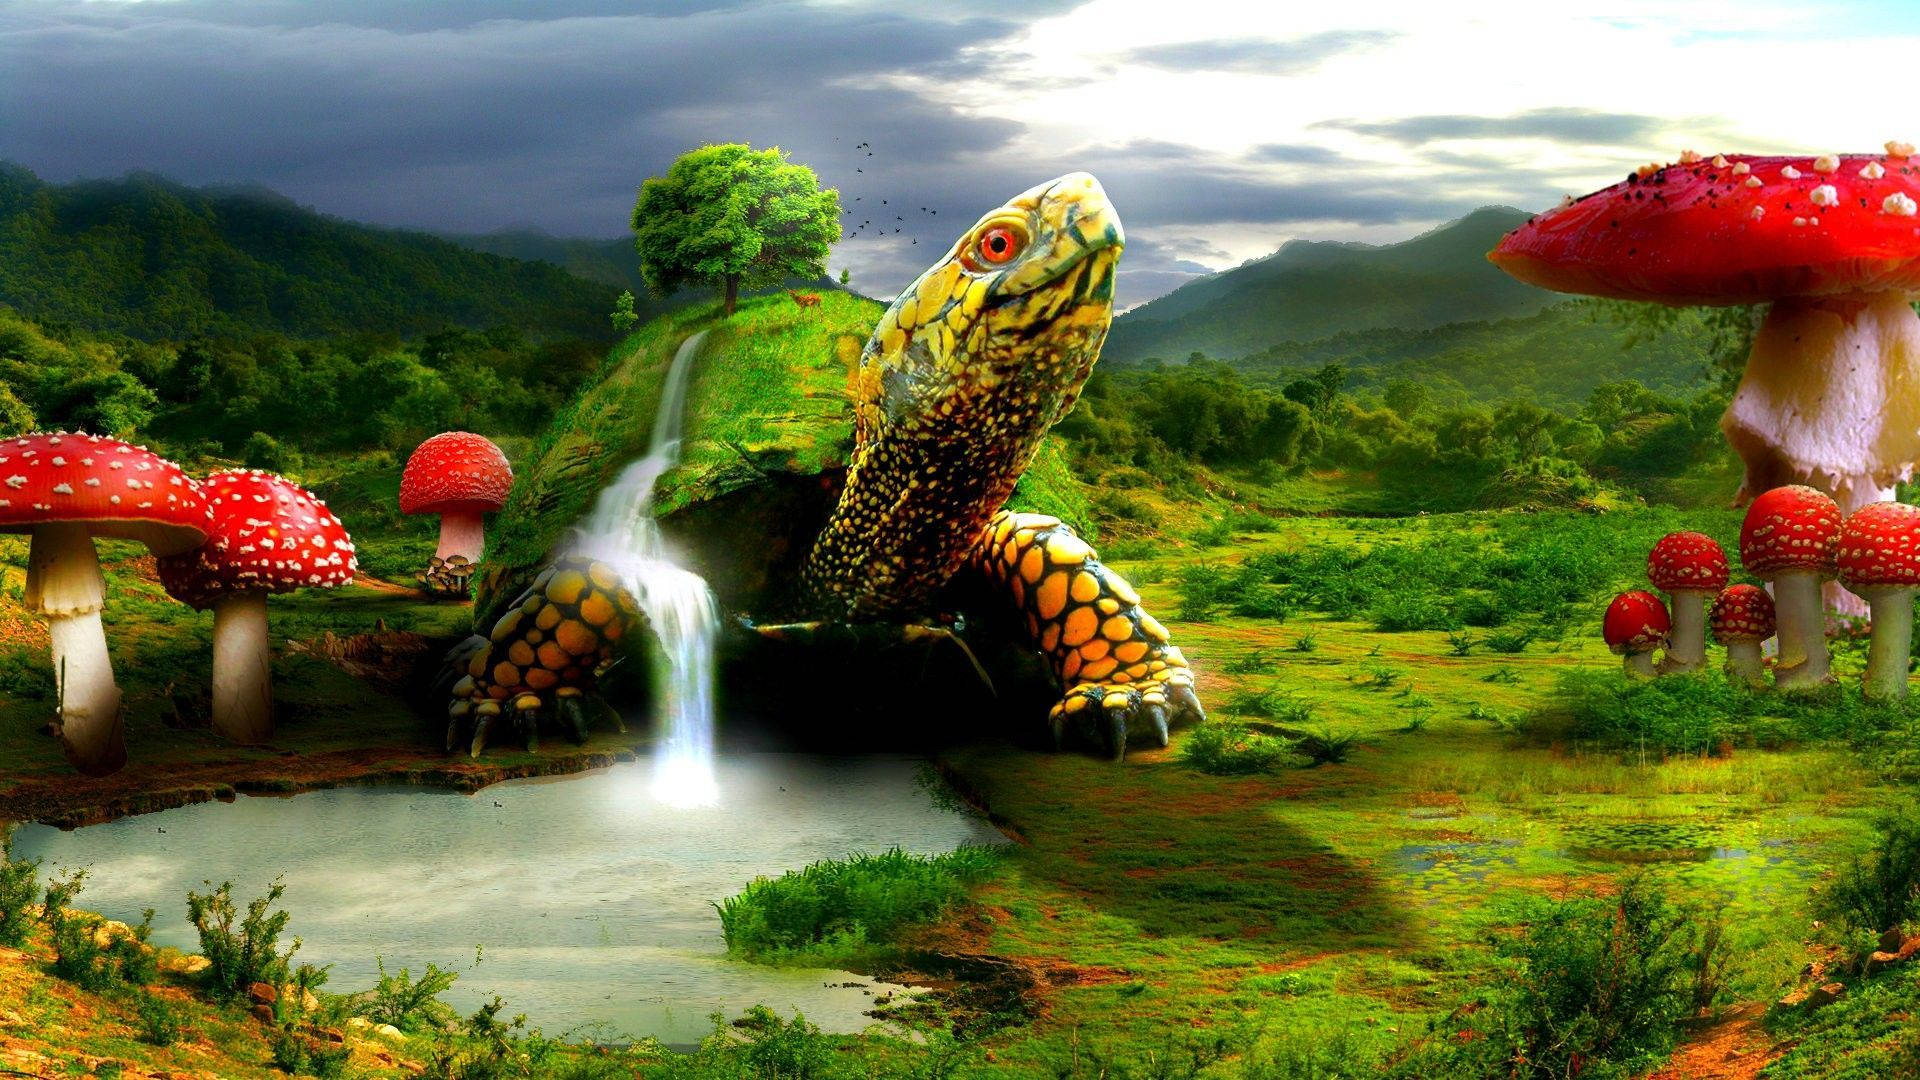 Cool Turtle Digital Fantasy